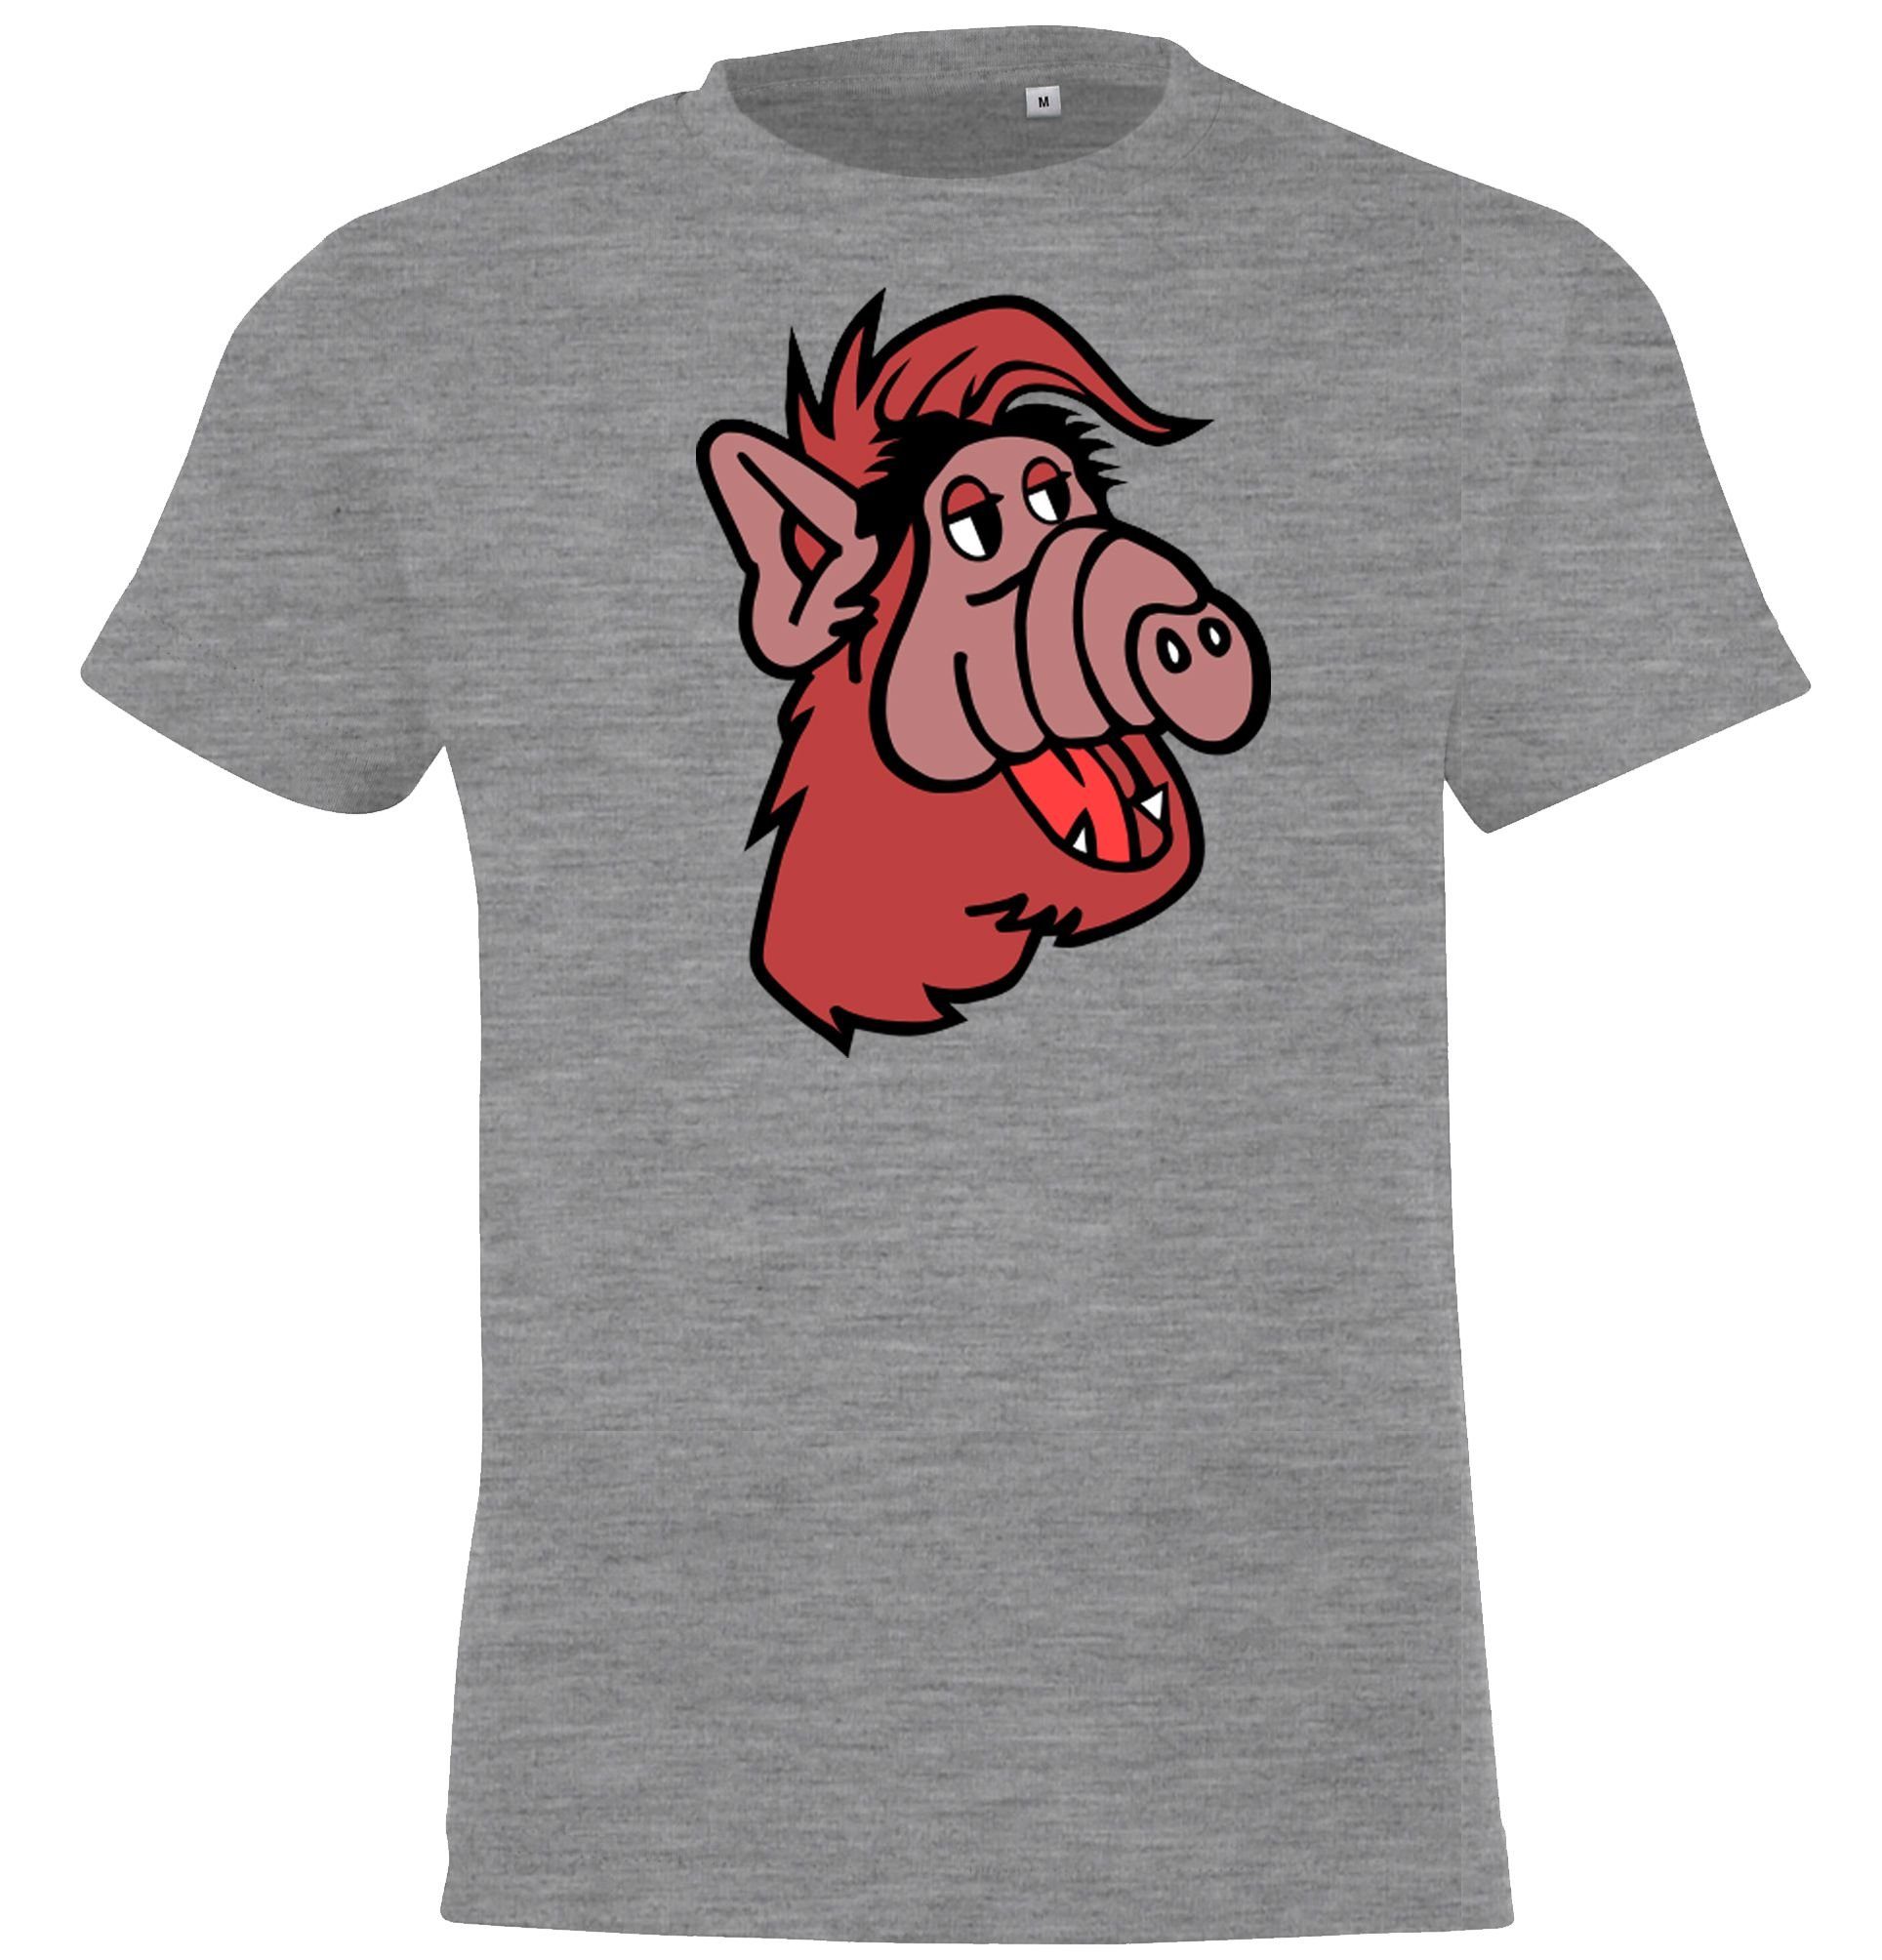 richtigem Kinder Frontprint Designz T-Shirt mit Alf T-Shirt Youth Grau